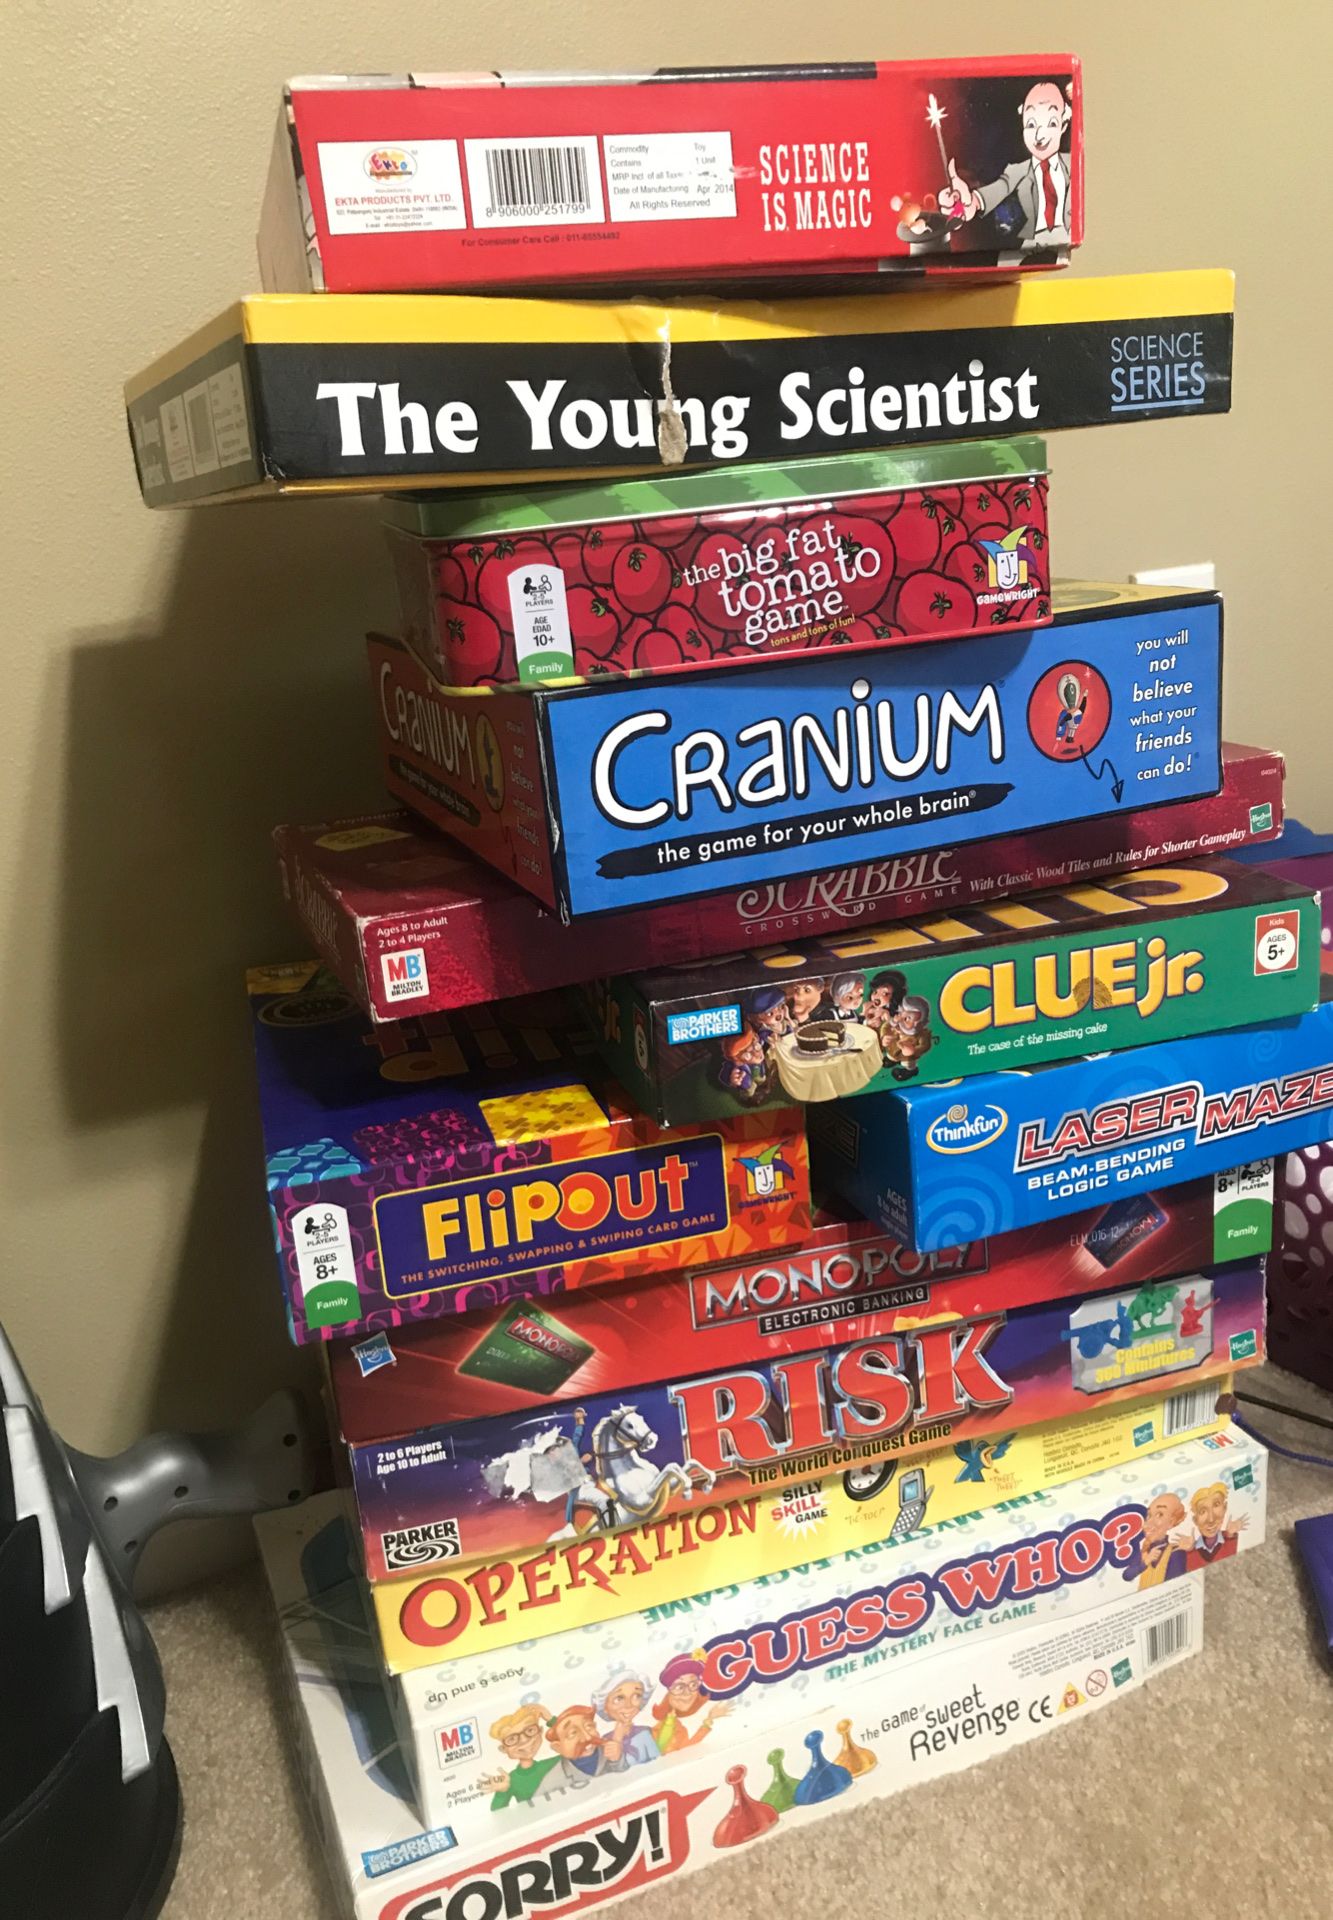 13 board games